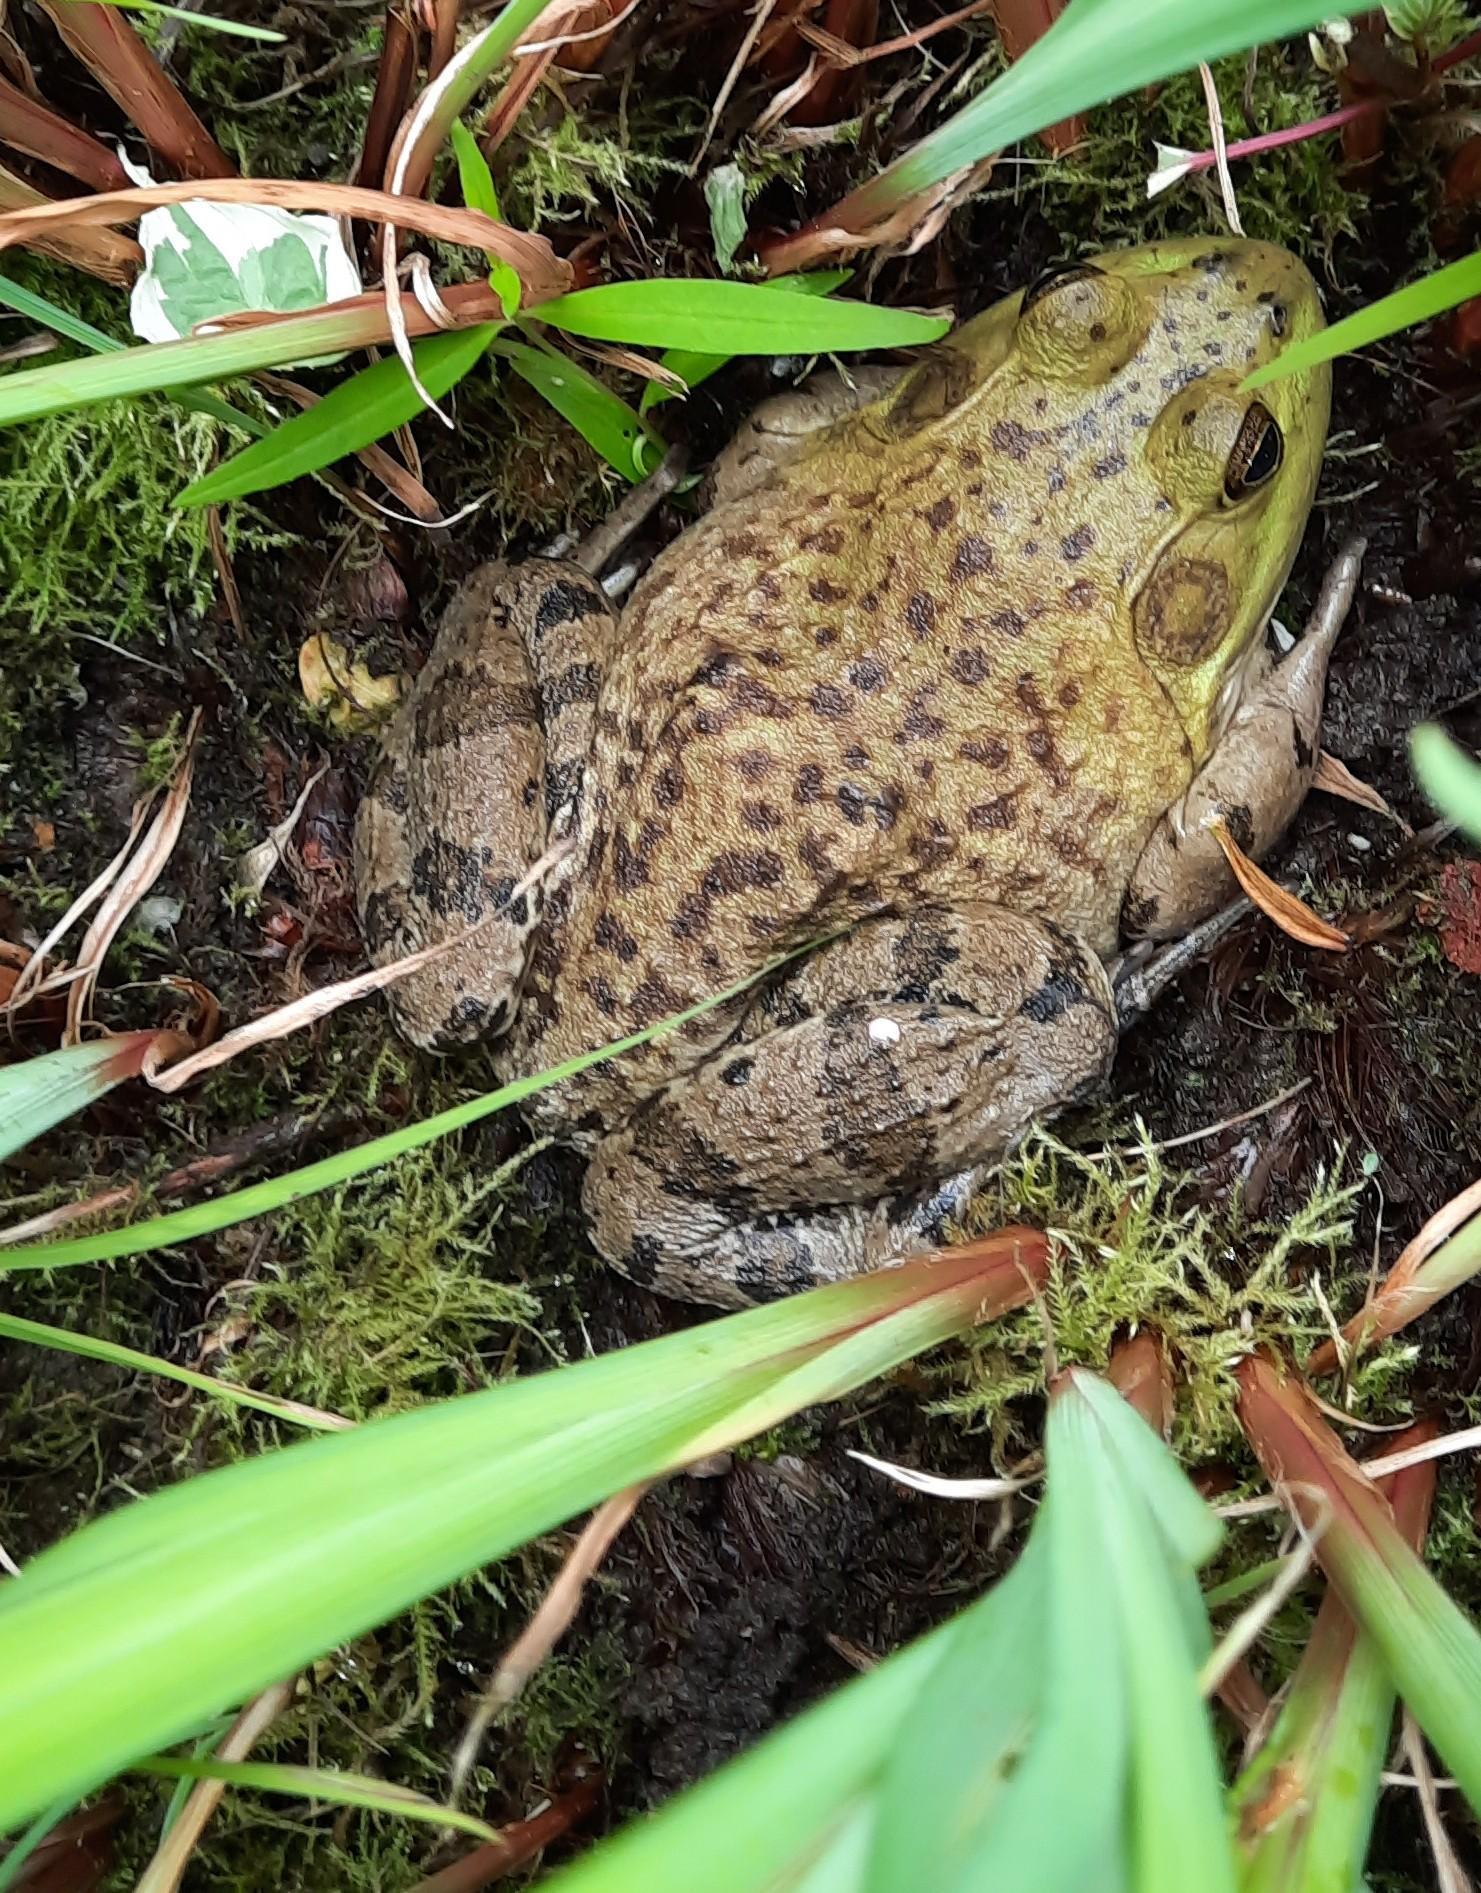 Bullfrog sits at the base of a plant